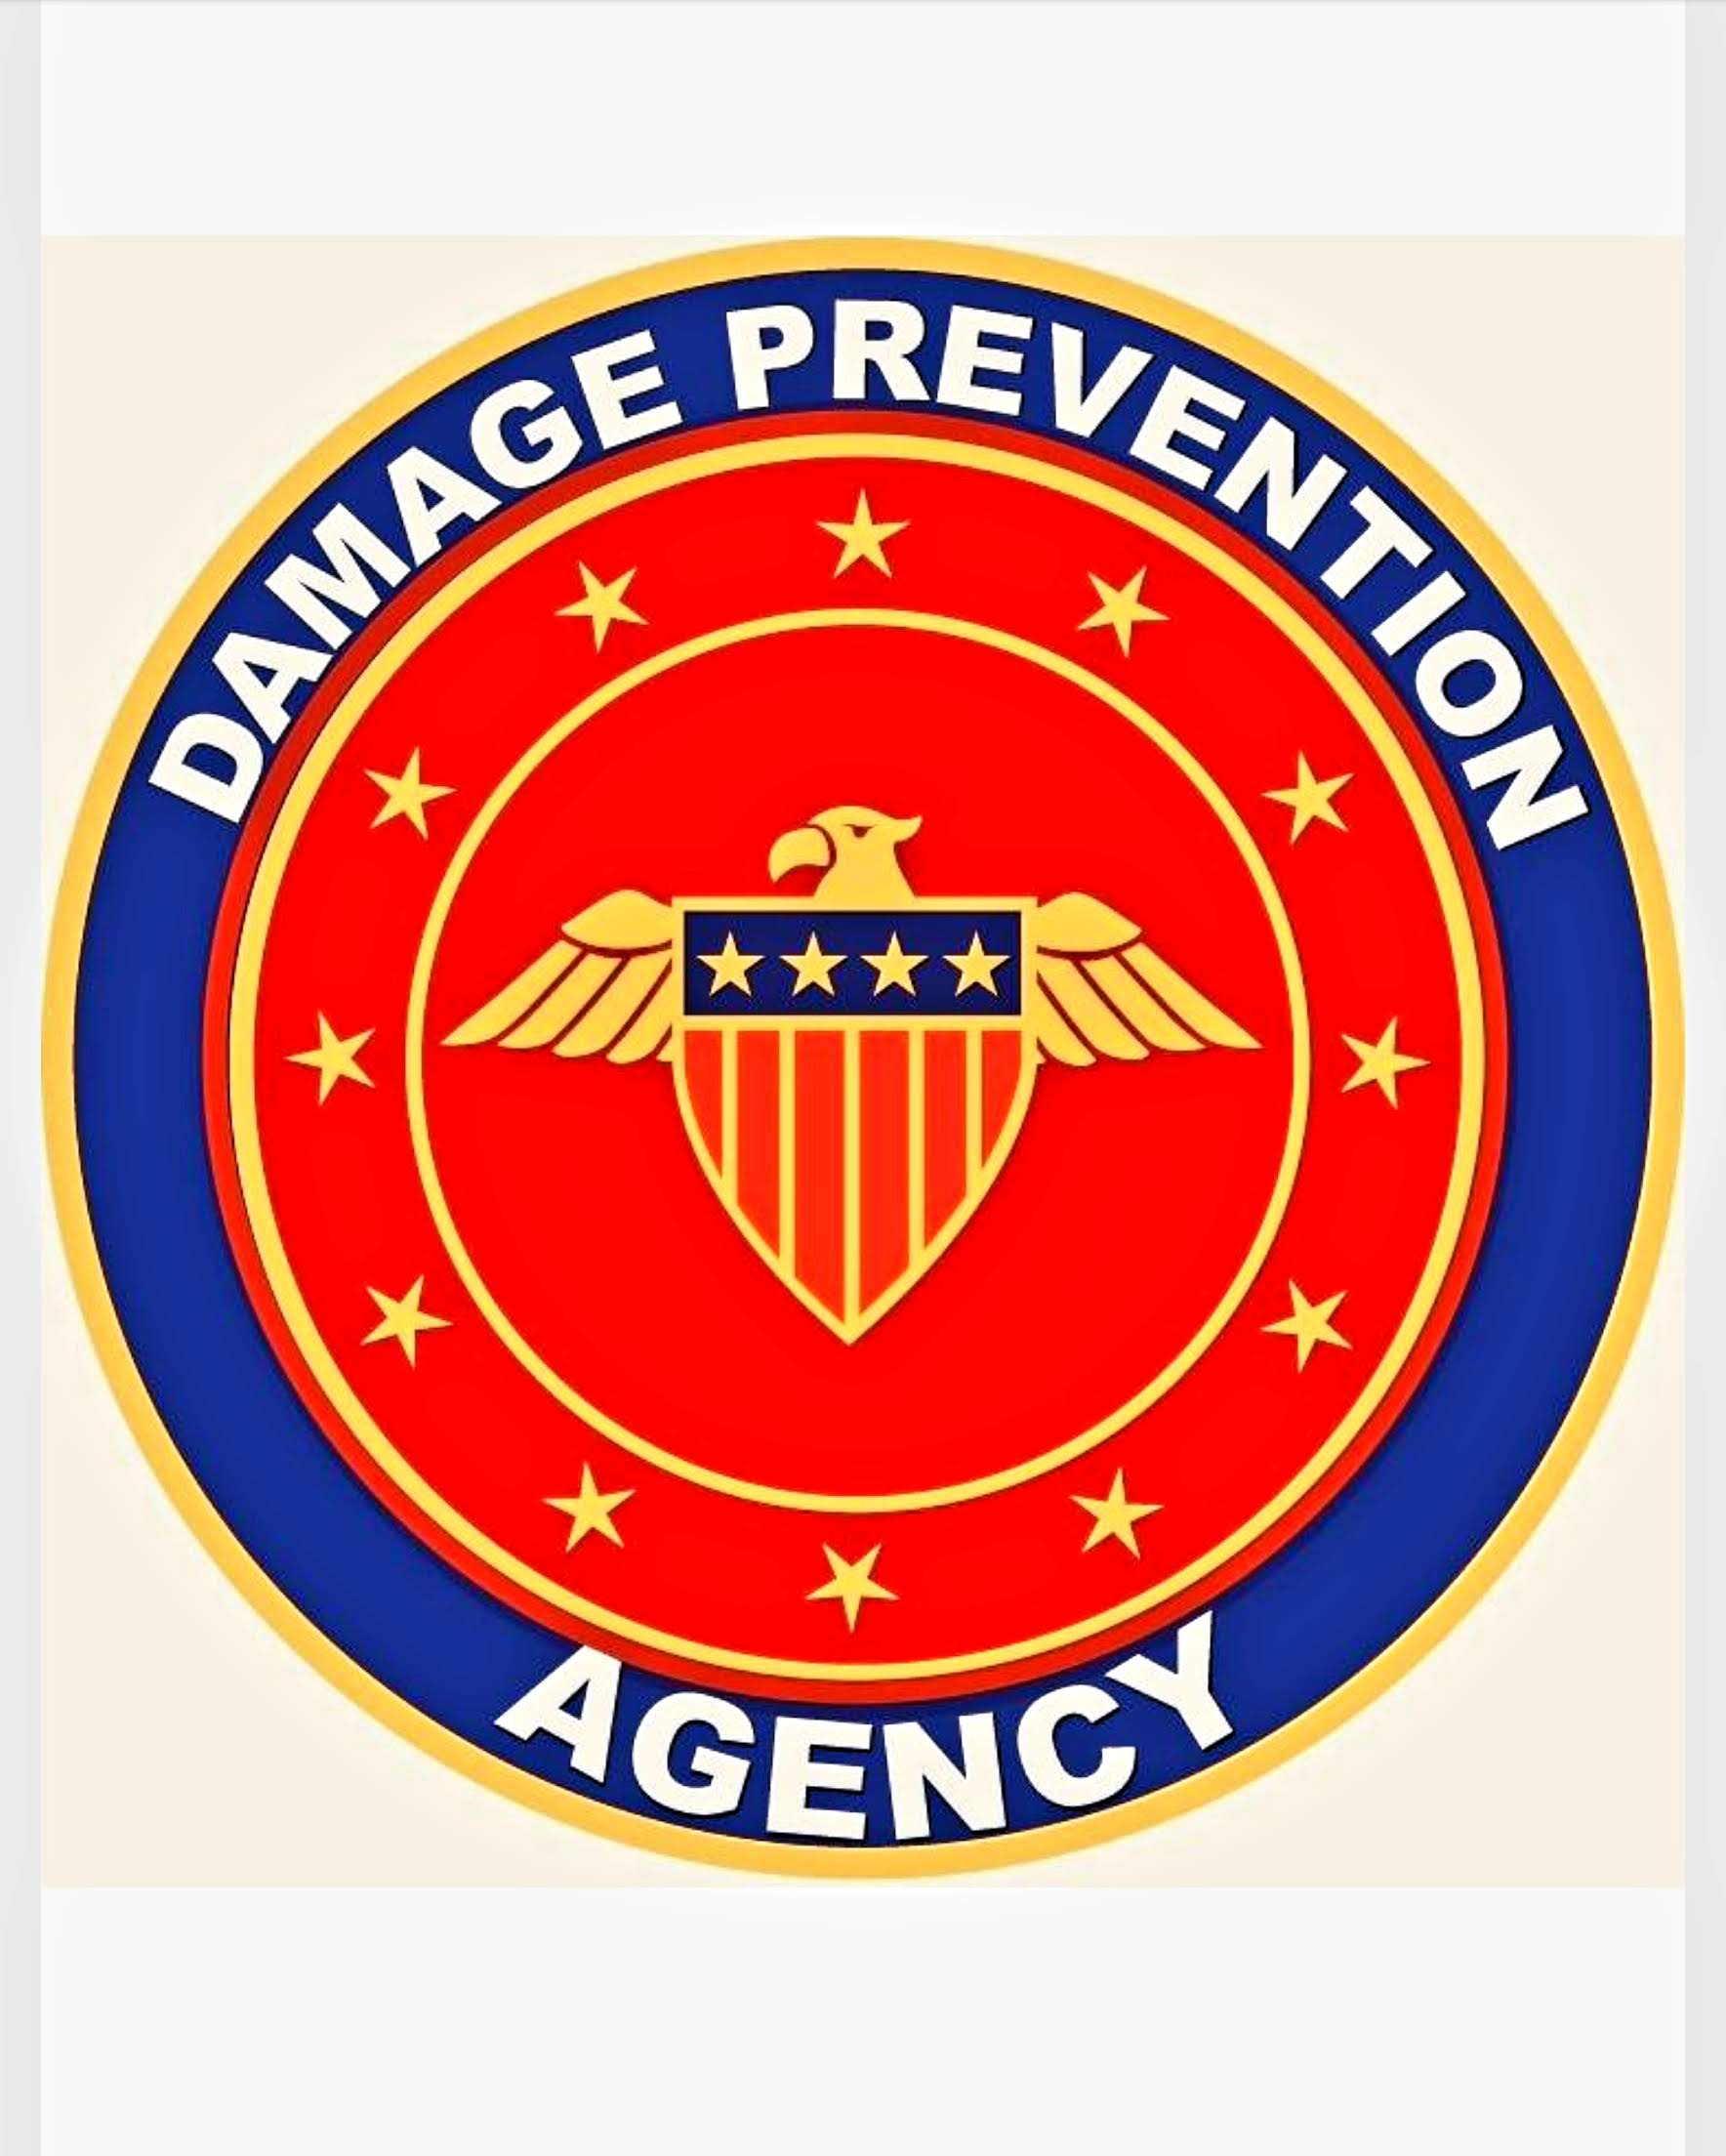 Damage Prevention Agency